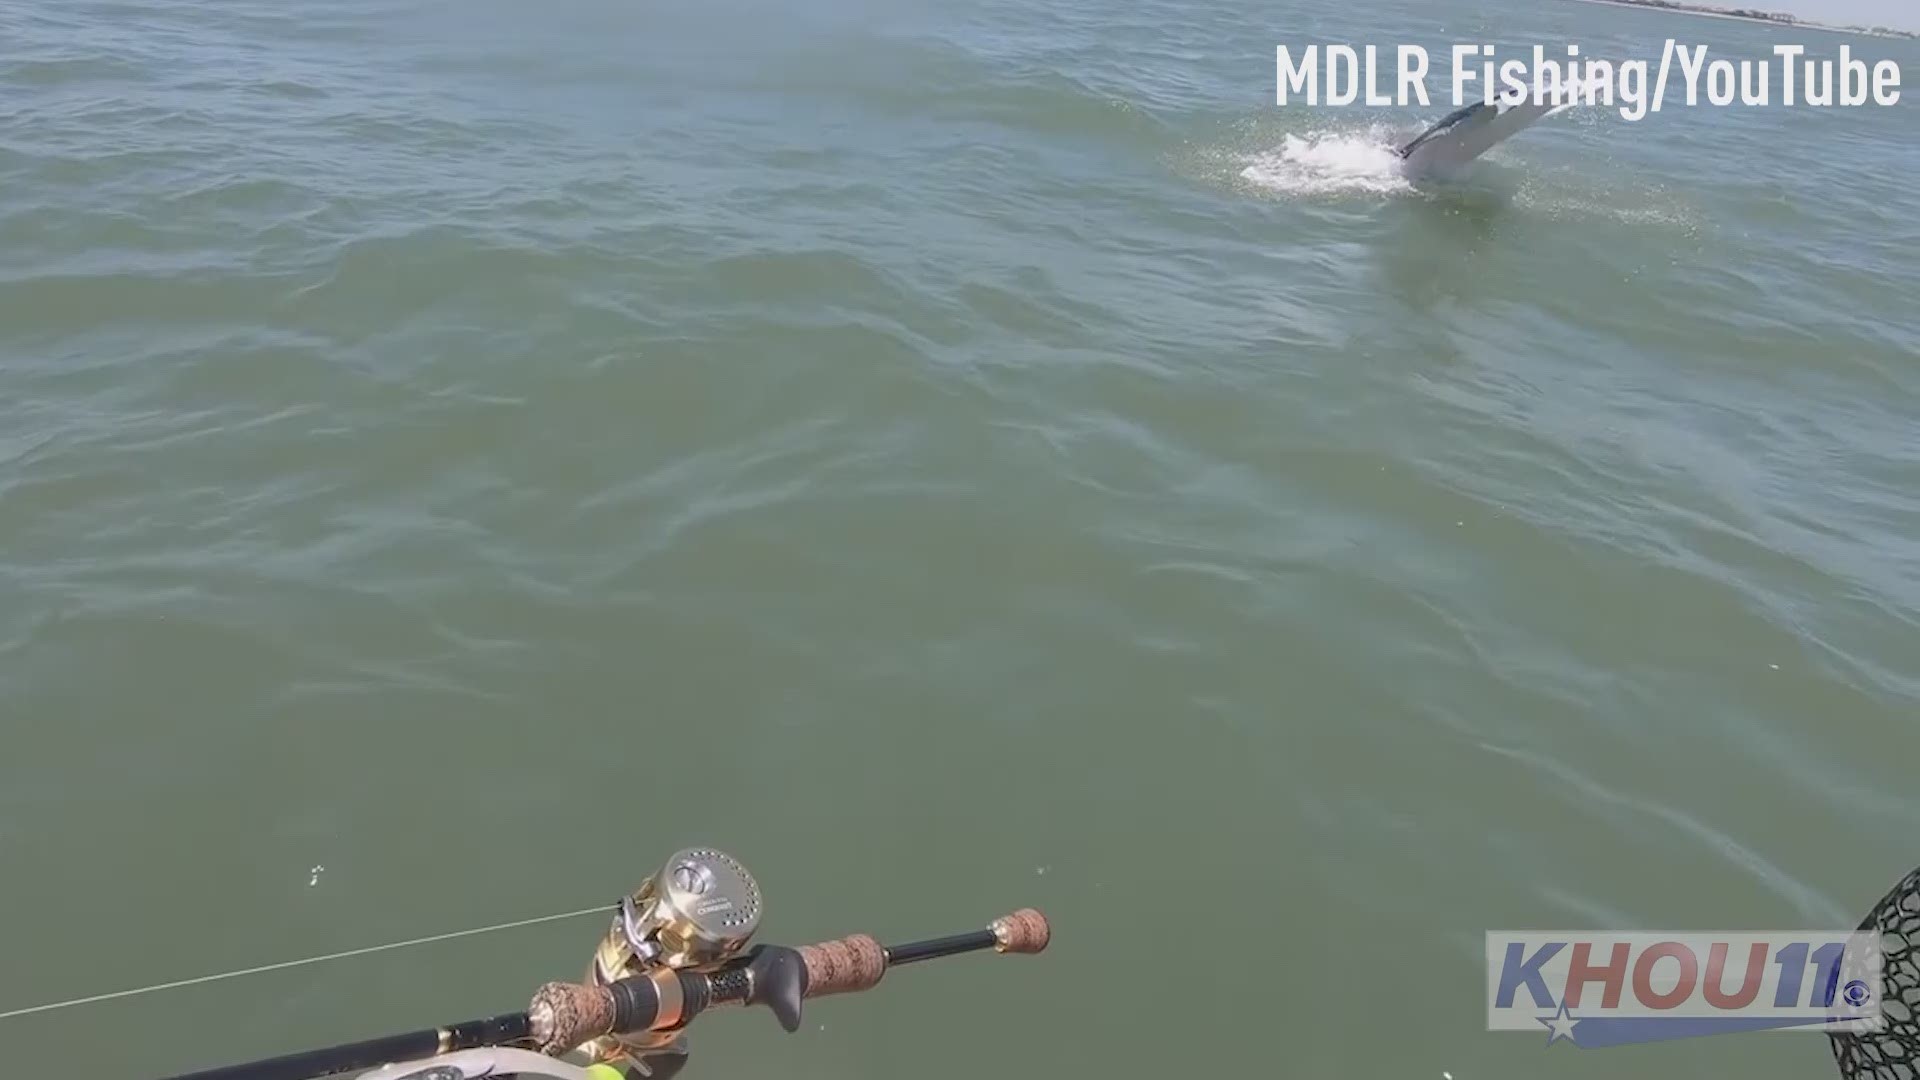 Video credit: MDLR Fishing